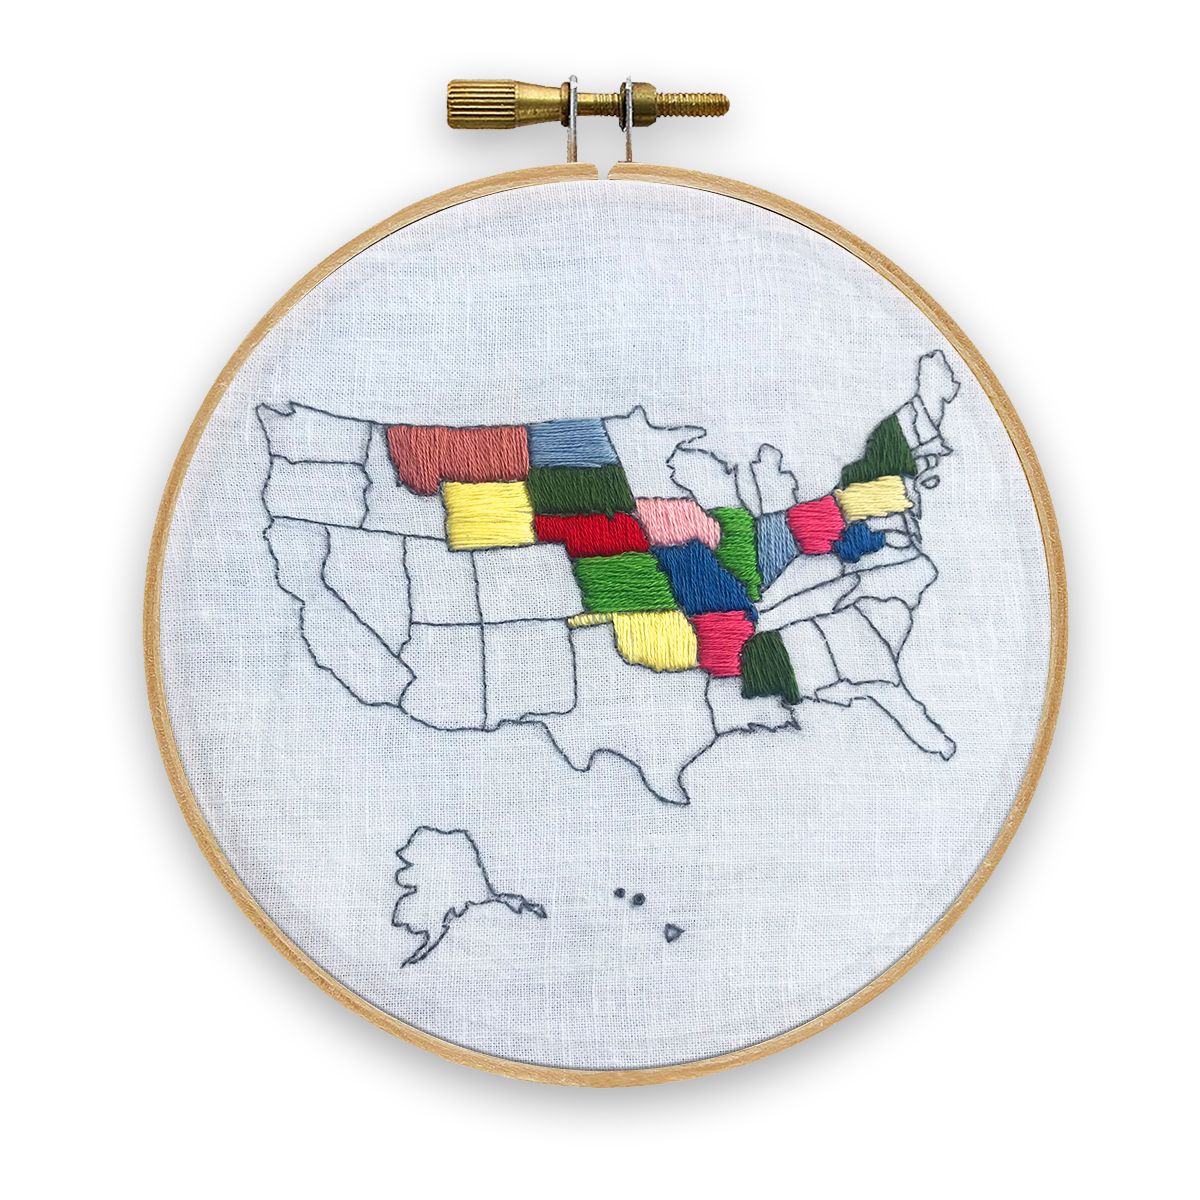 USA Map Hand Embroidery Pattern